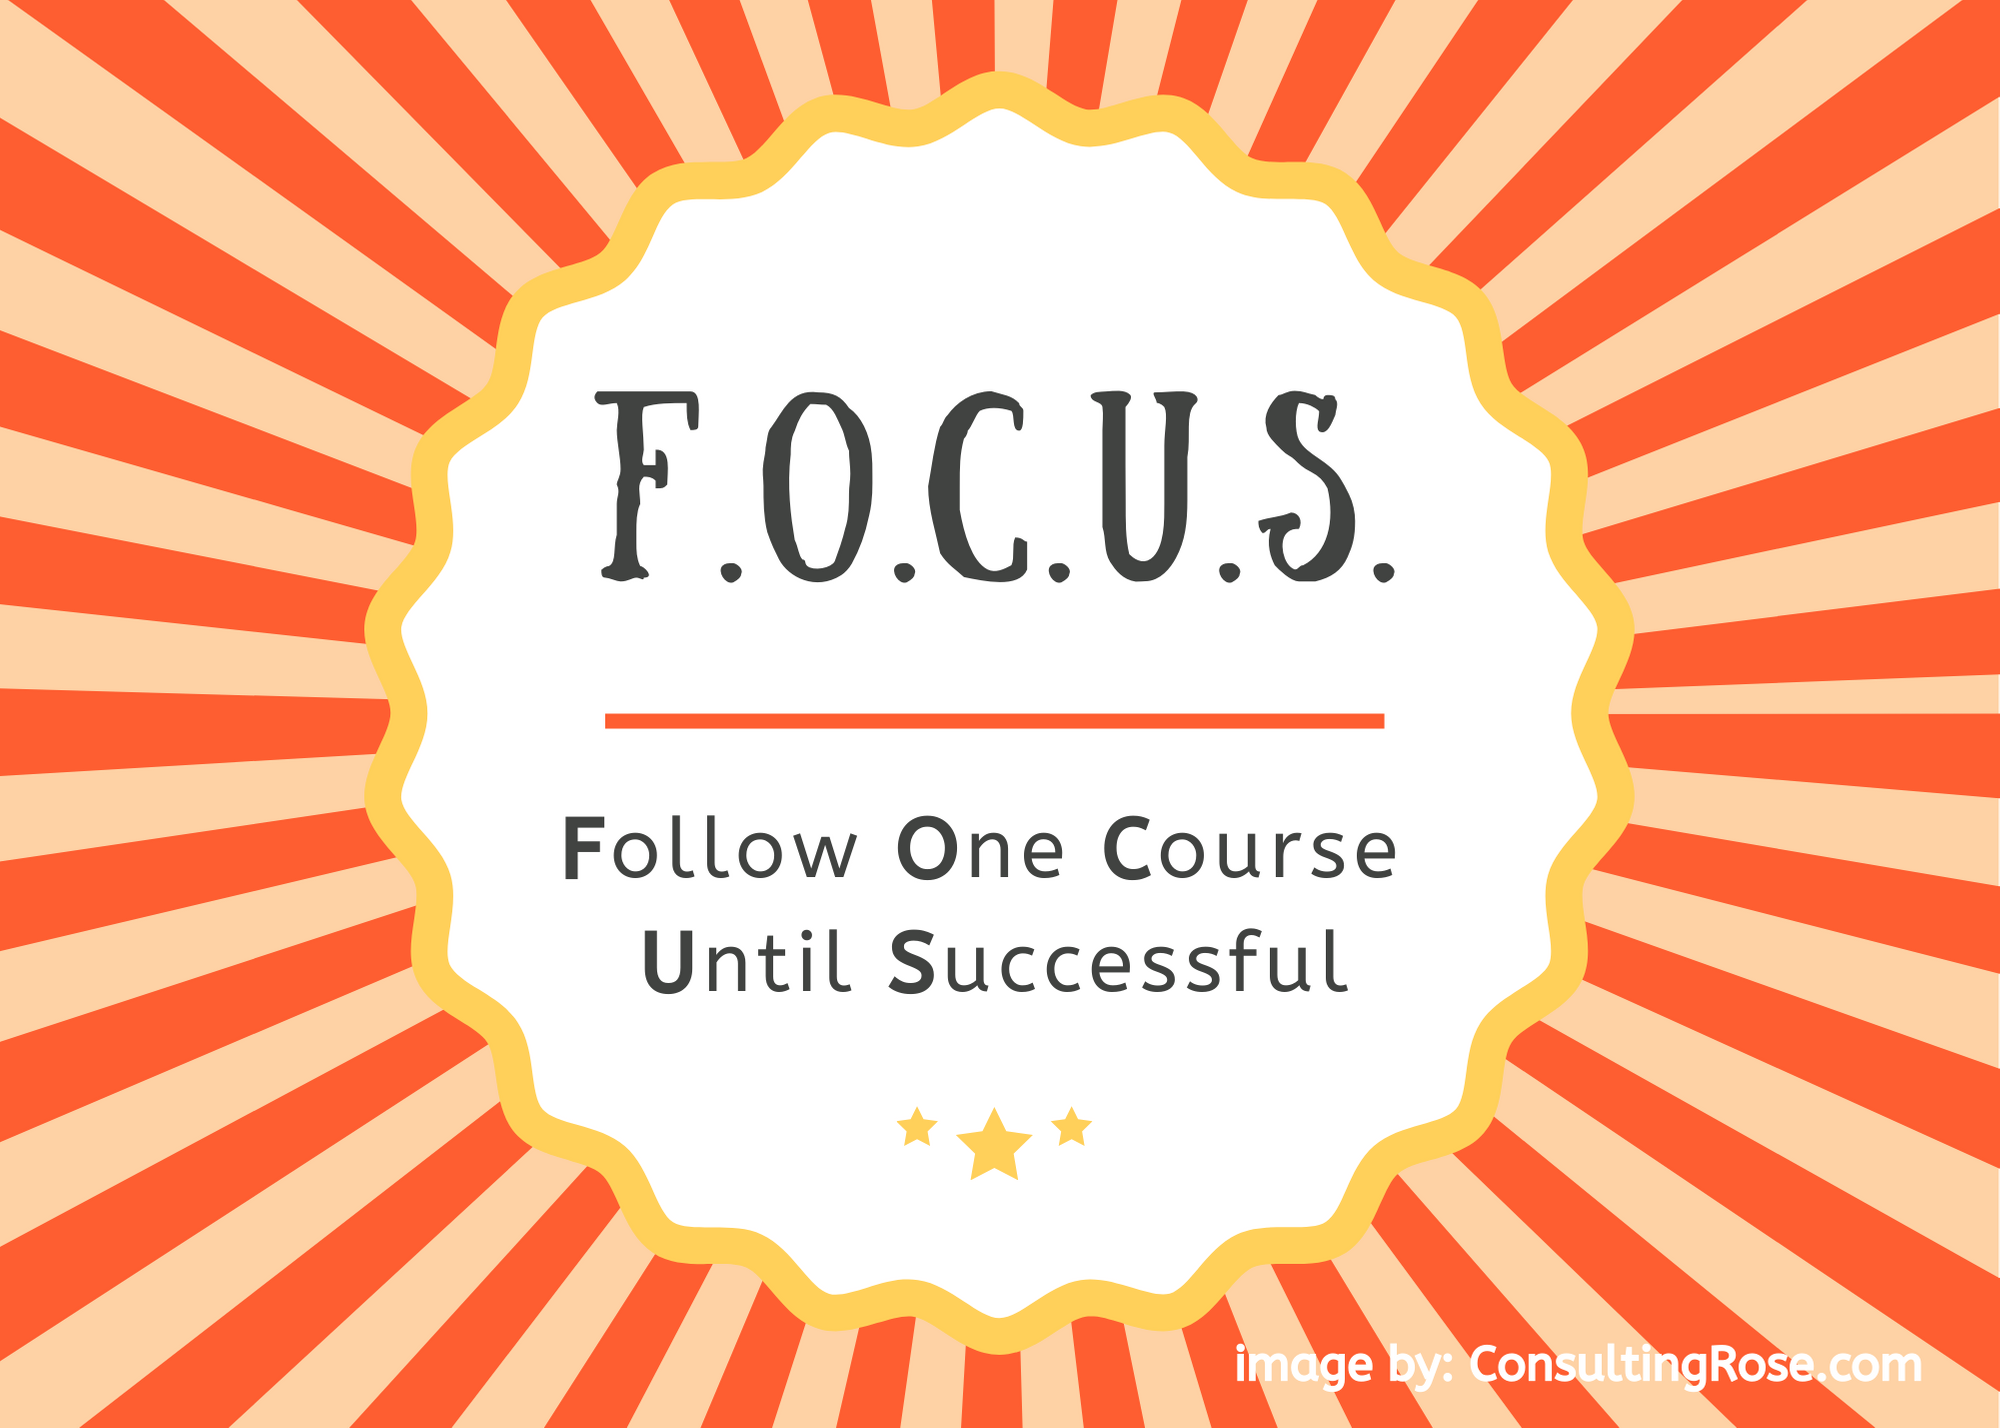 FOCUS: Follow One Course Until Successful